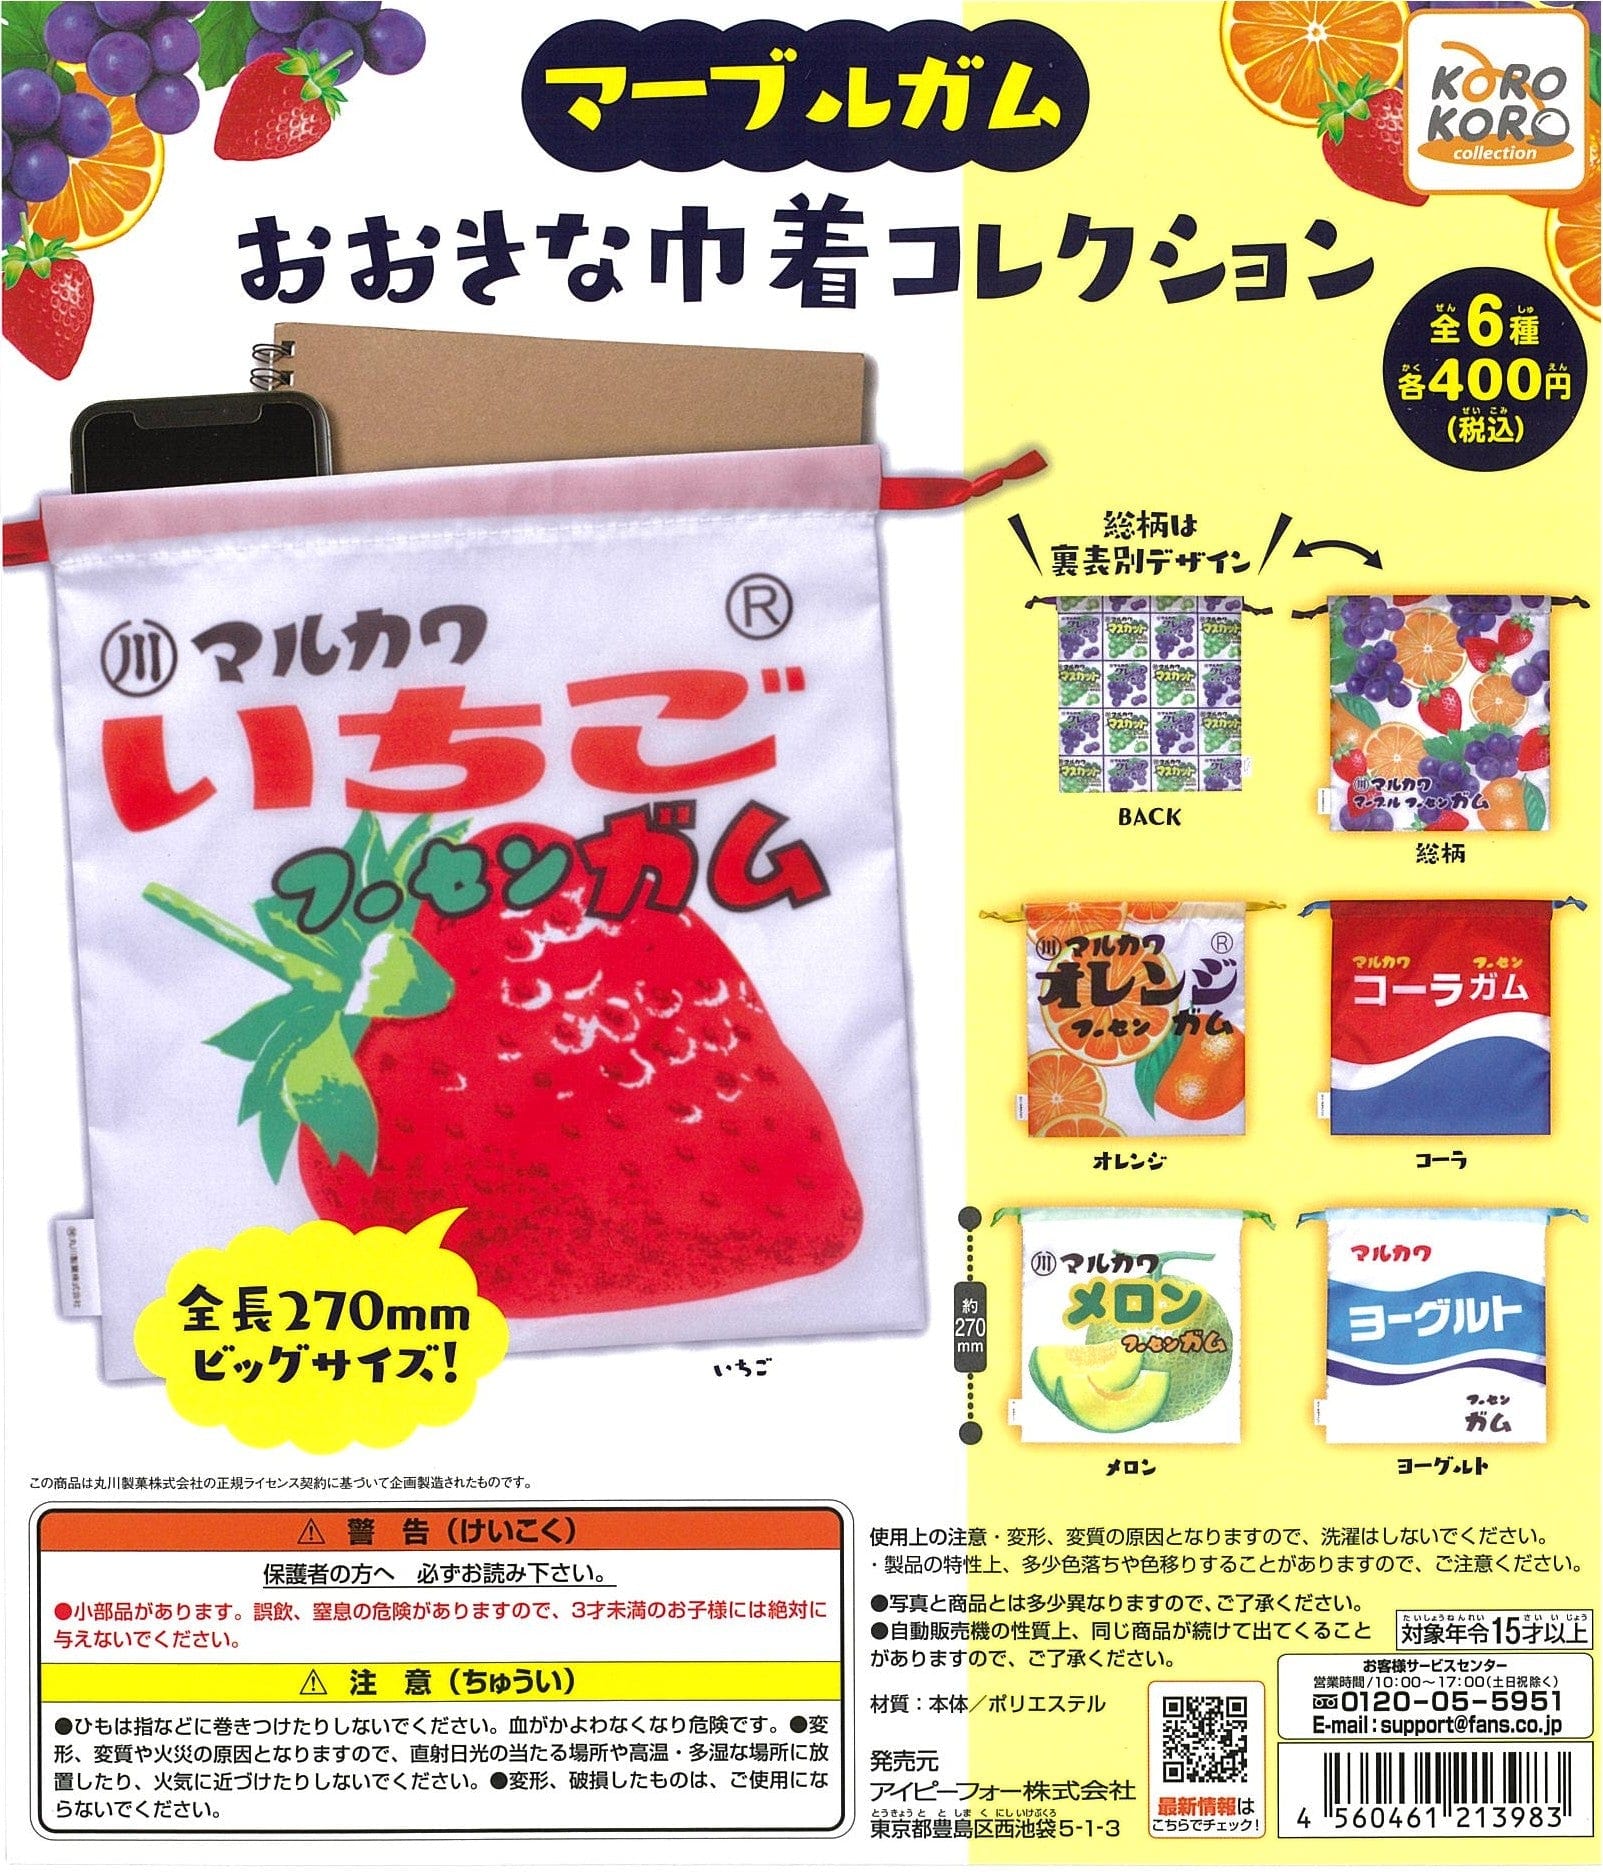 KoroKoro Collection CP2389 Marble Gum ( Marukawa Confectionery Co. Ltd. ) Marble Gum Big Kinchaku Collection